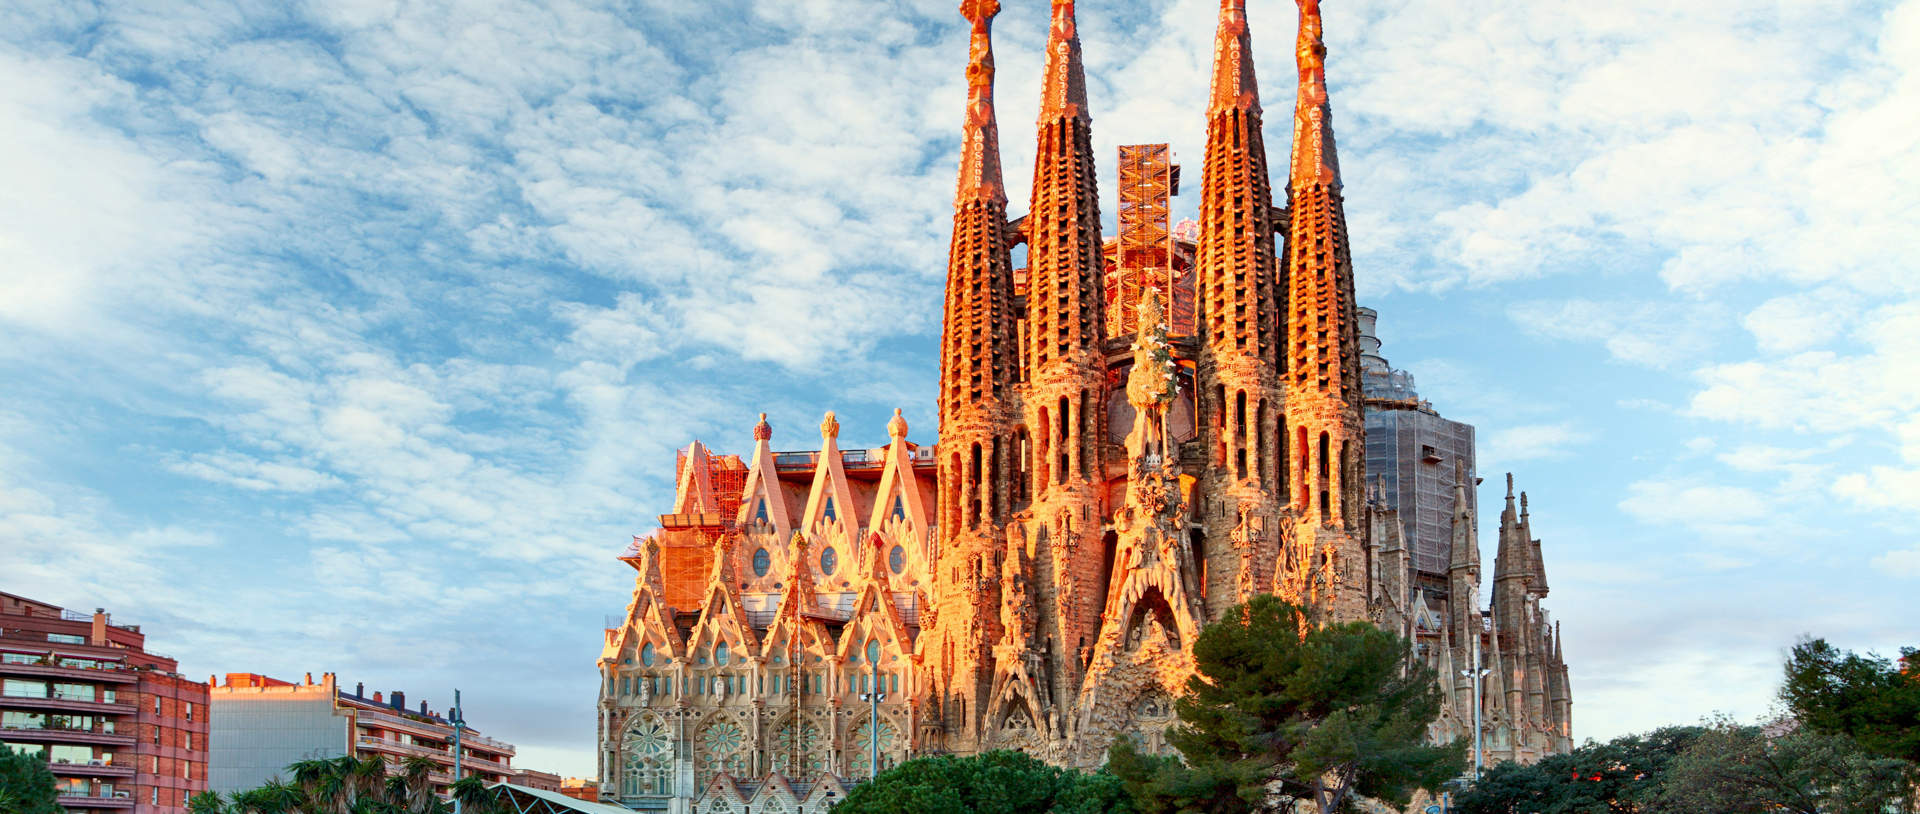 Sagrada Familia Cathedral Barcelona (1)